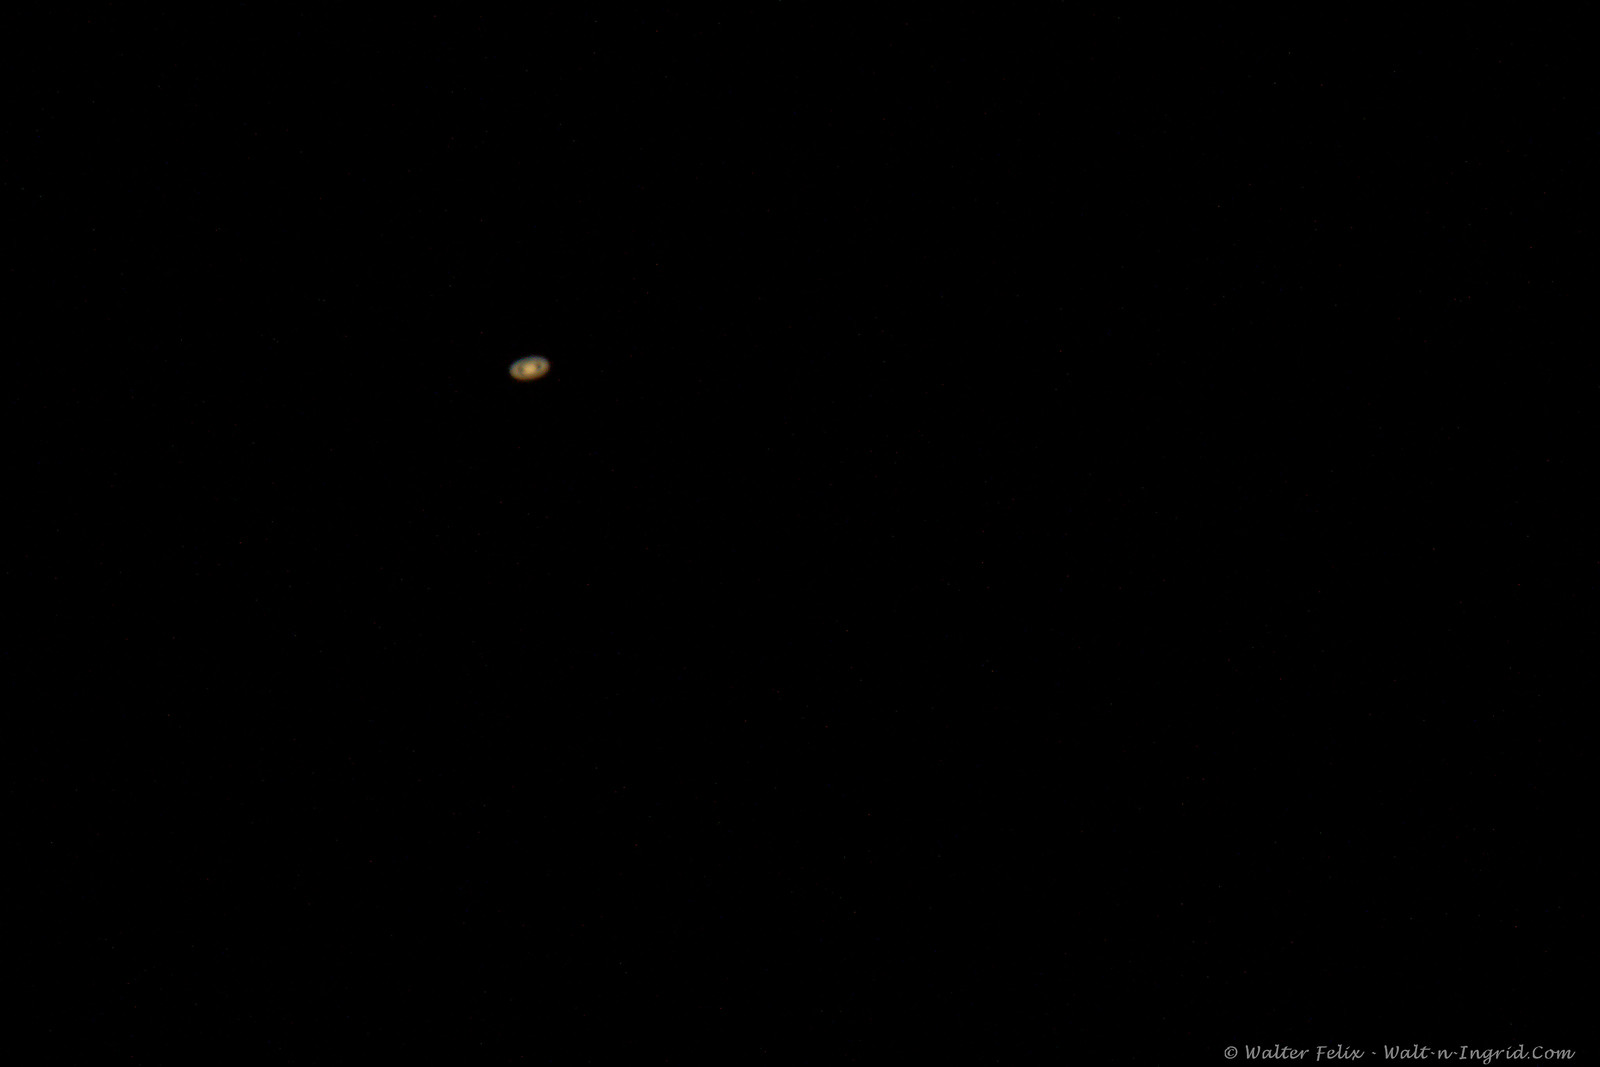 Saturn from 858 Million Miles Away